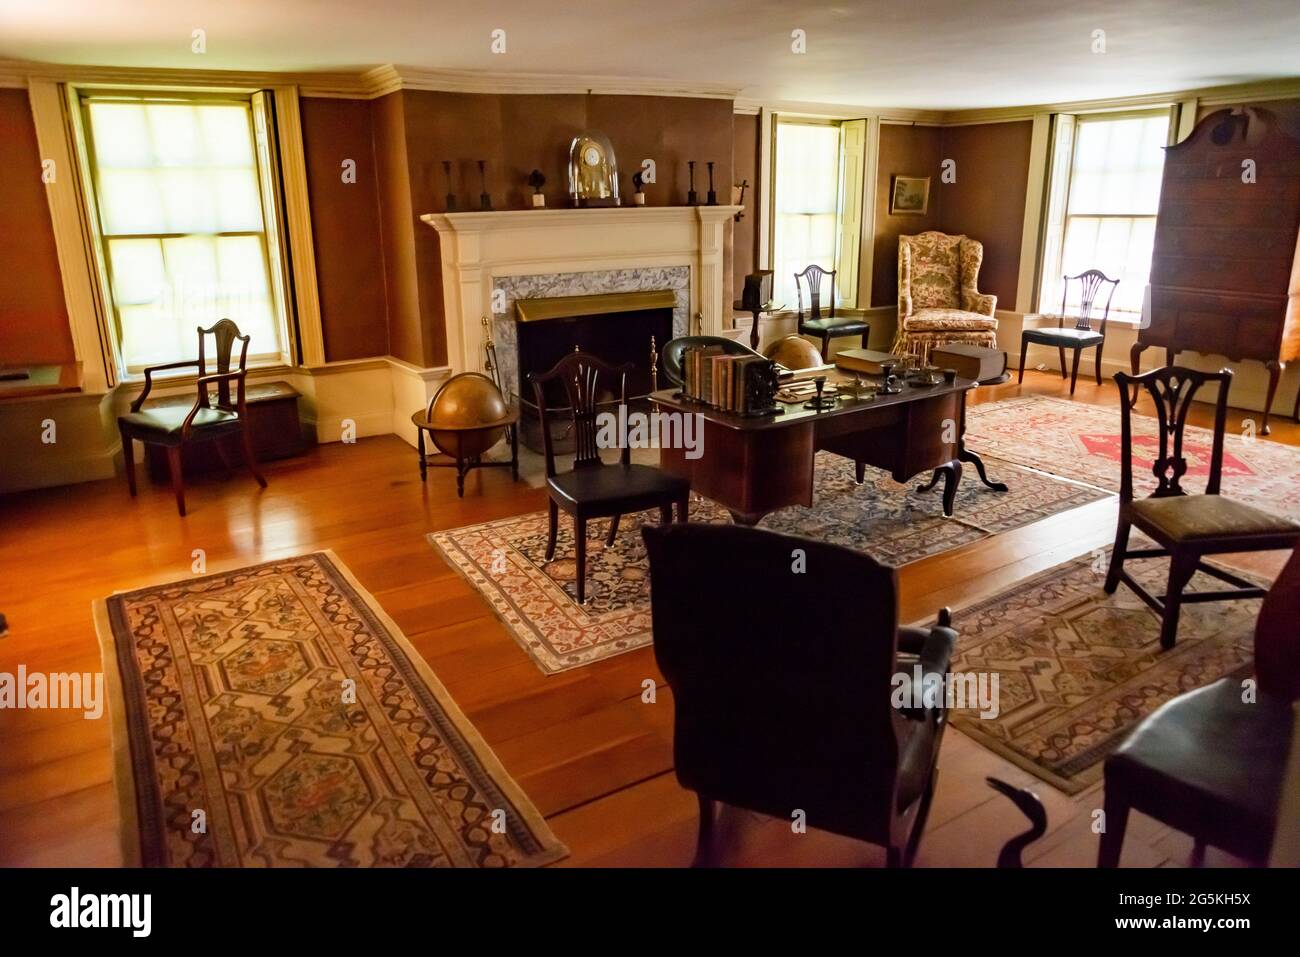 Interioro of John Adams house in Quincy, MA. Stock Photo